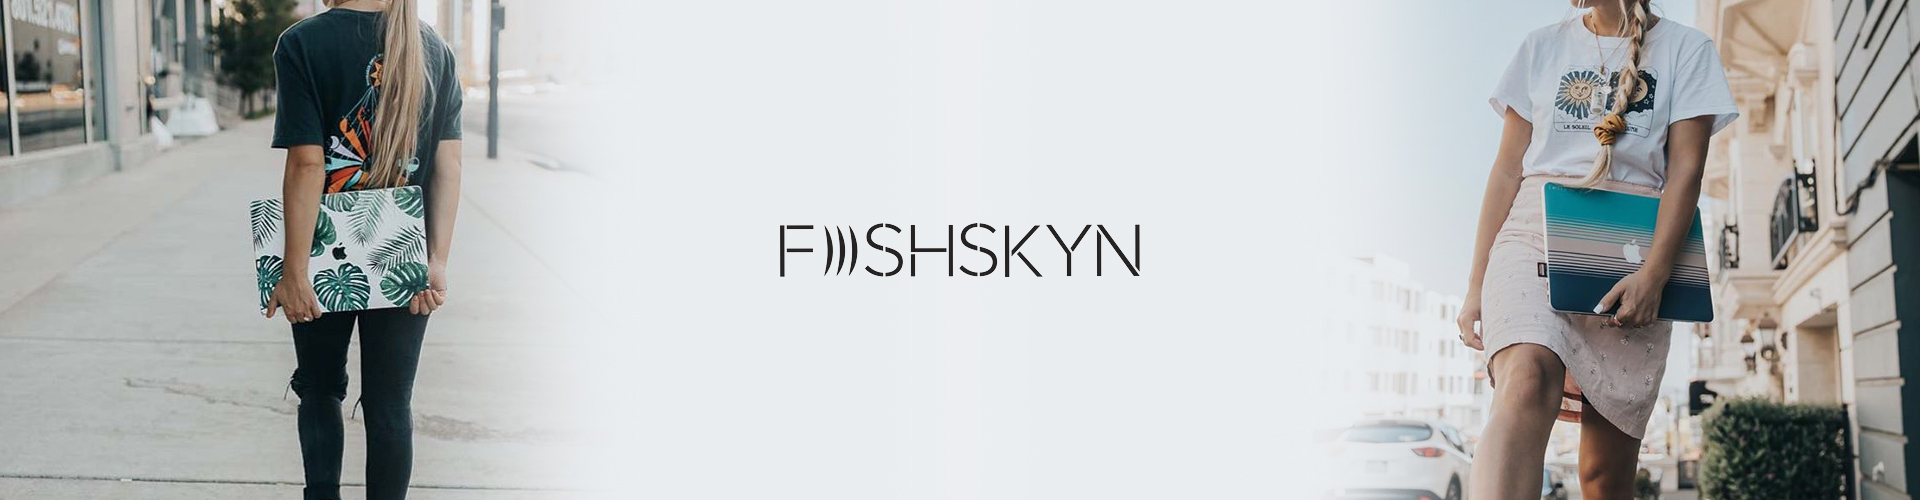 Fishskyn banner